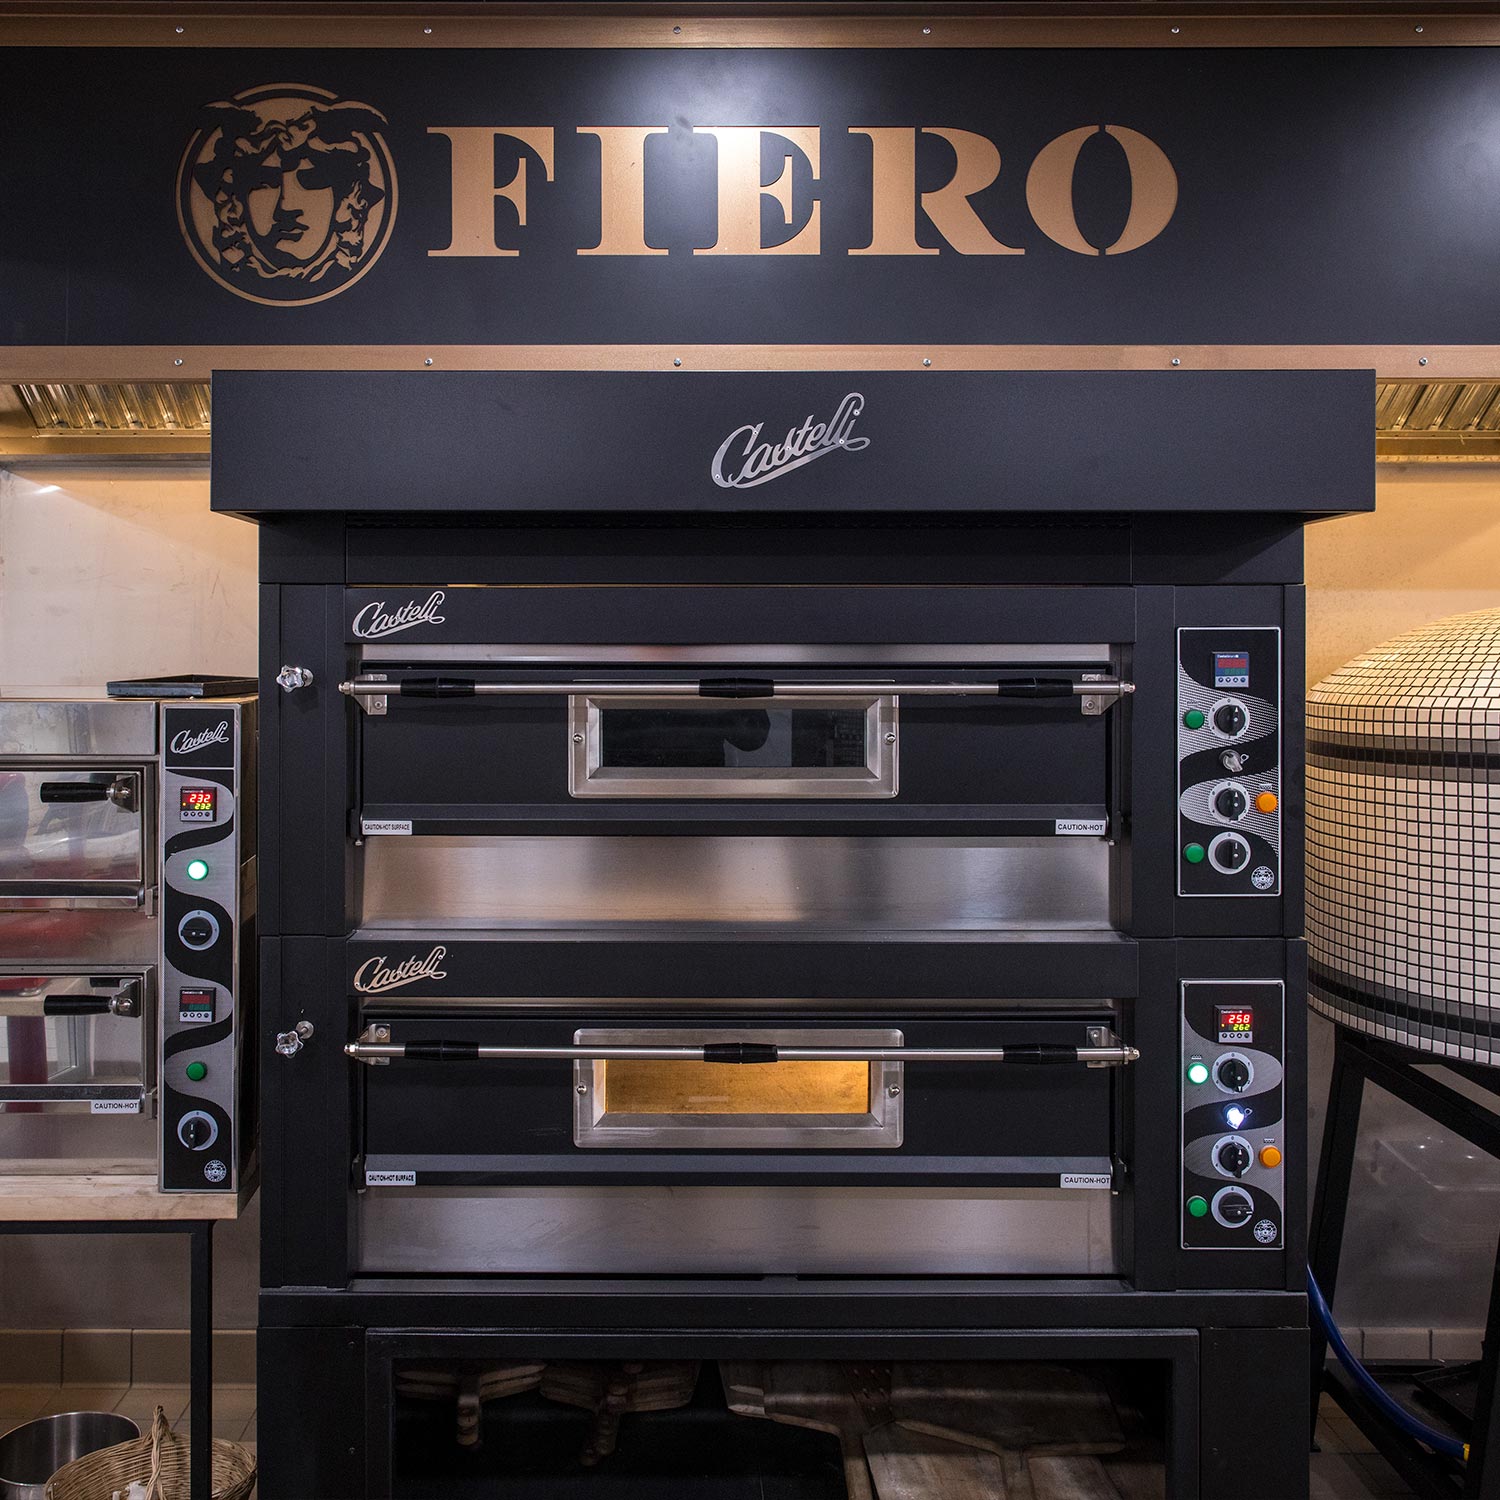 Fiero test kitchen with Castelli oven